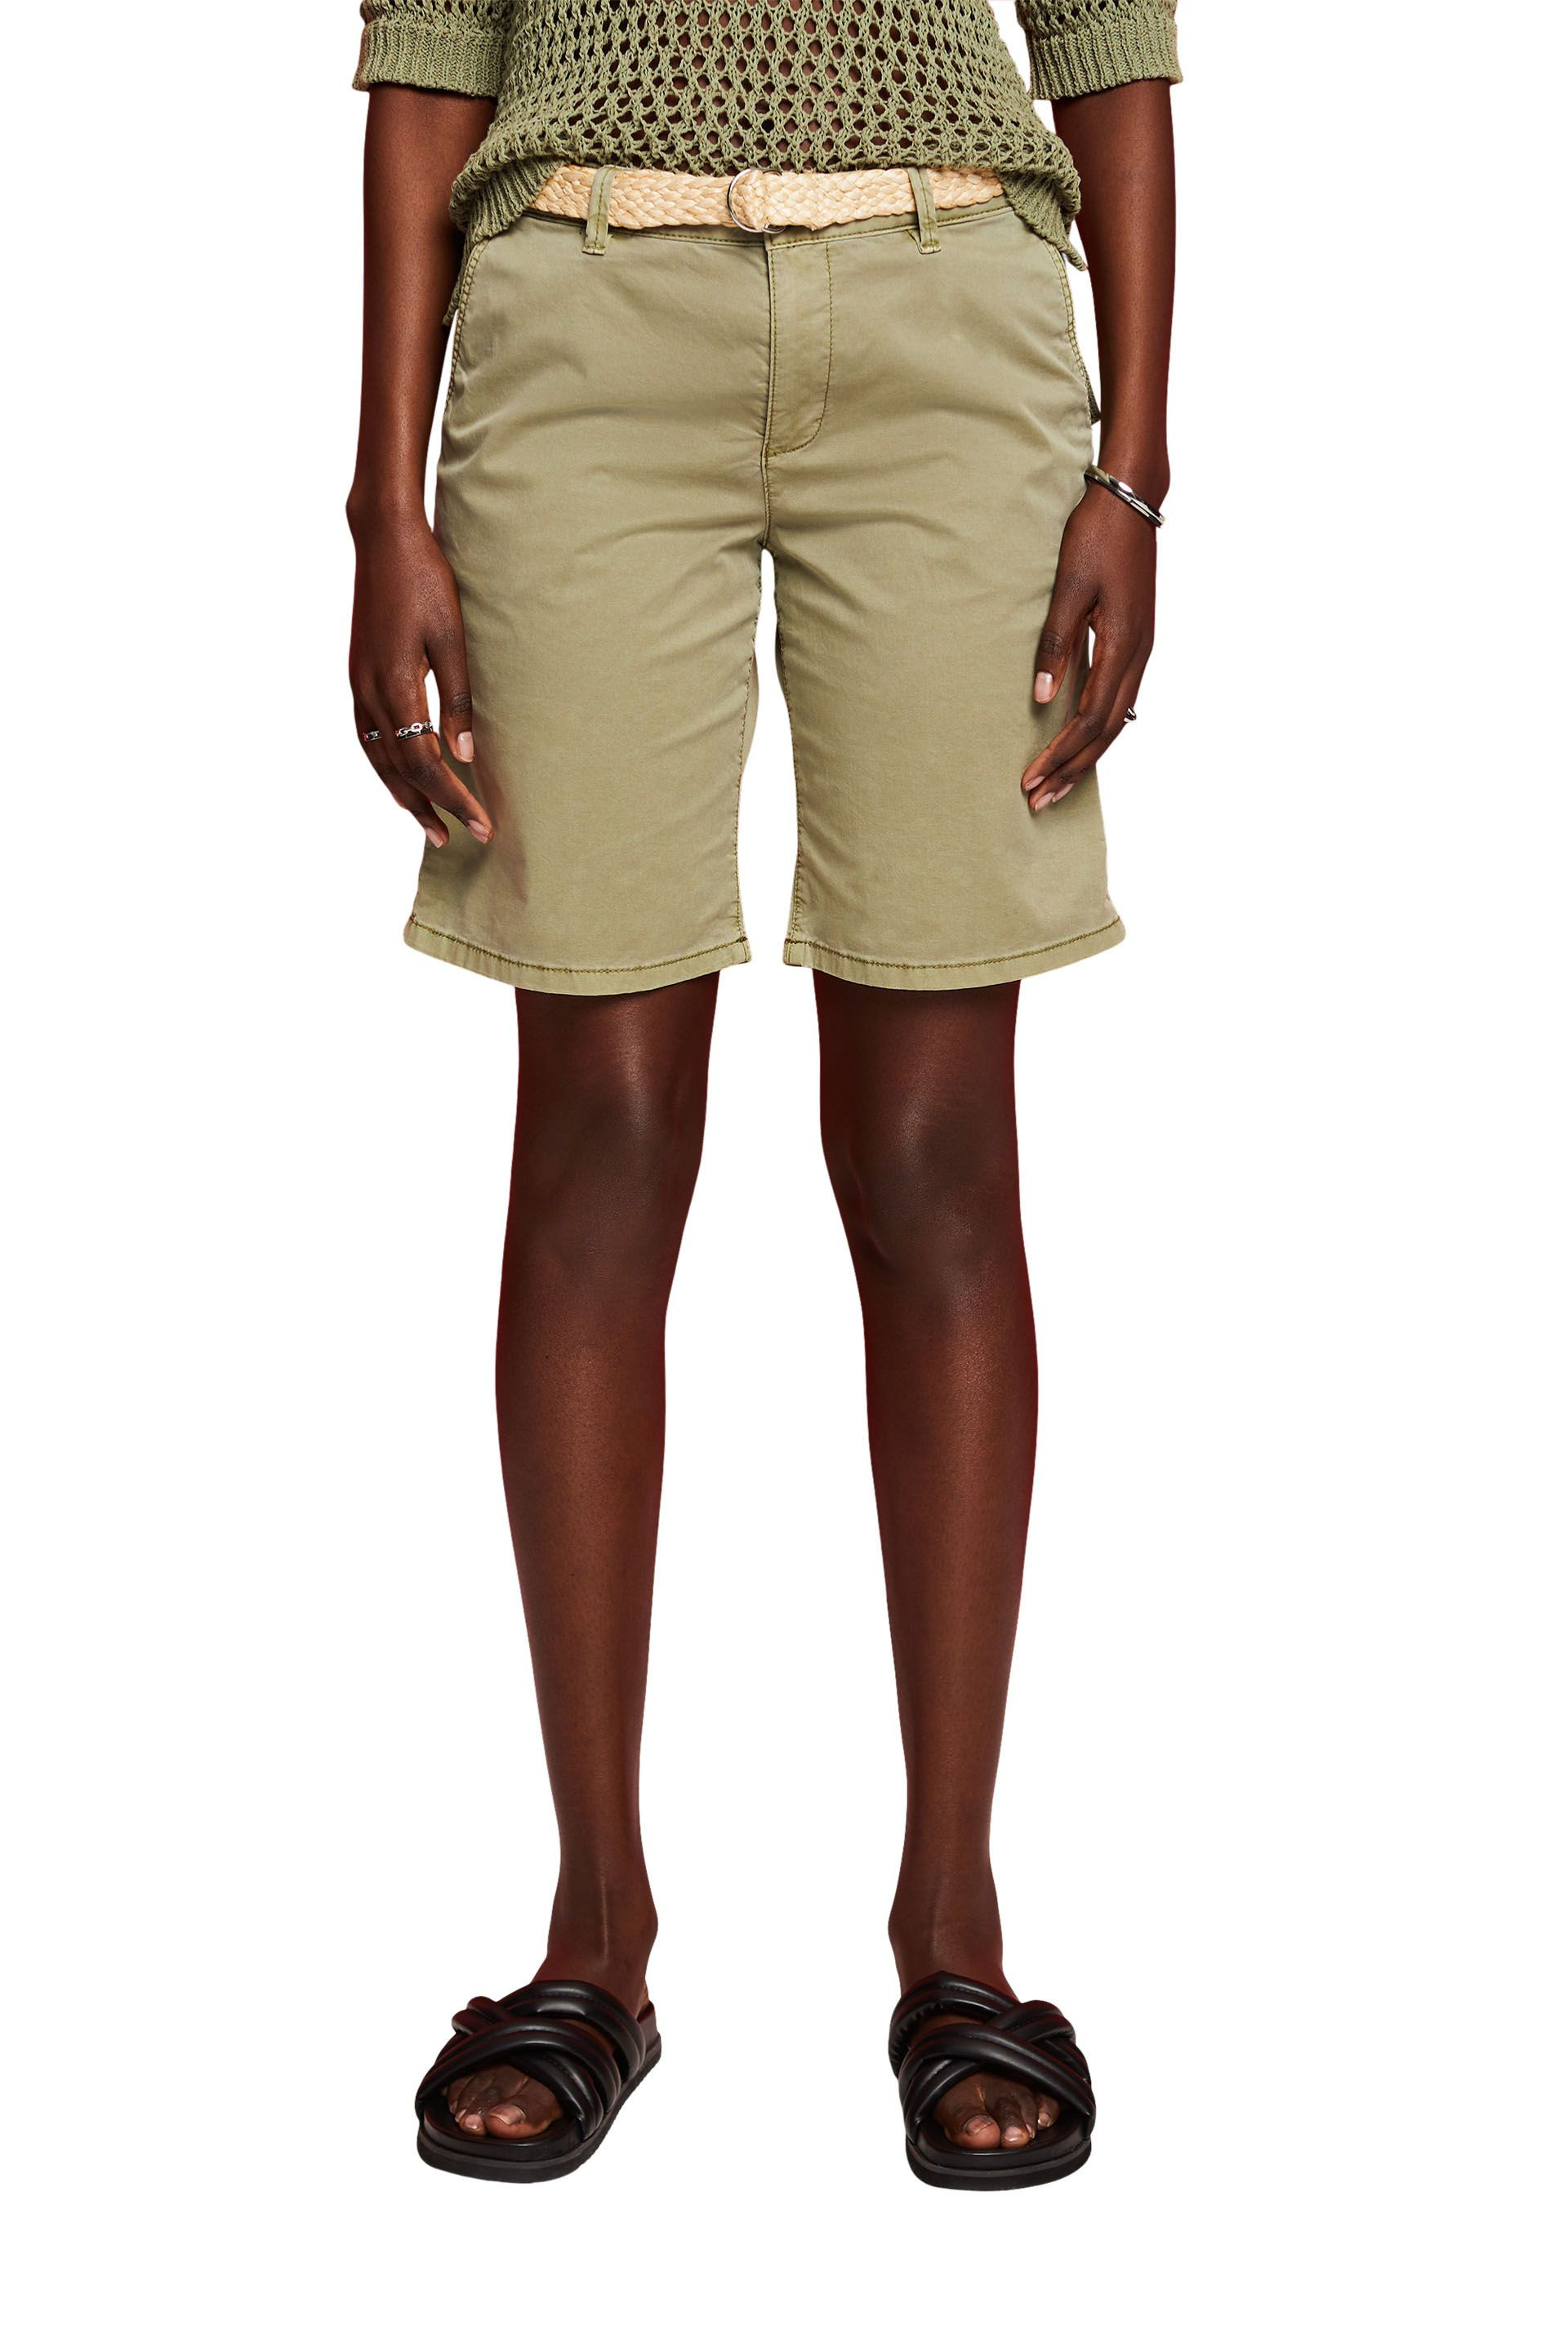 Esprit - Shorts con cintura intrecciata in rafia, Verde, large image number 1